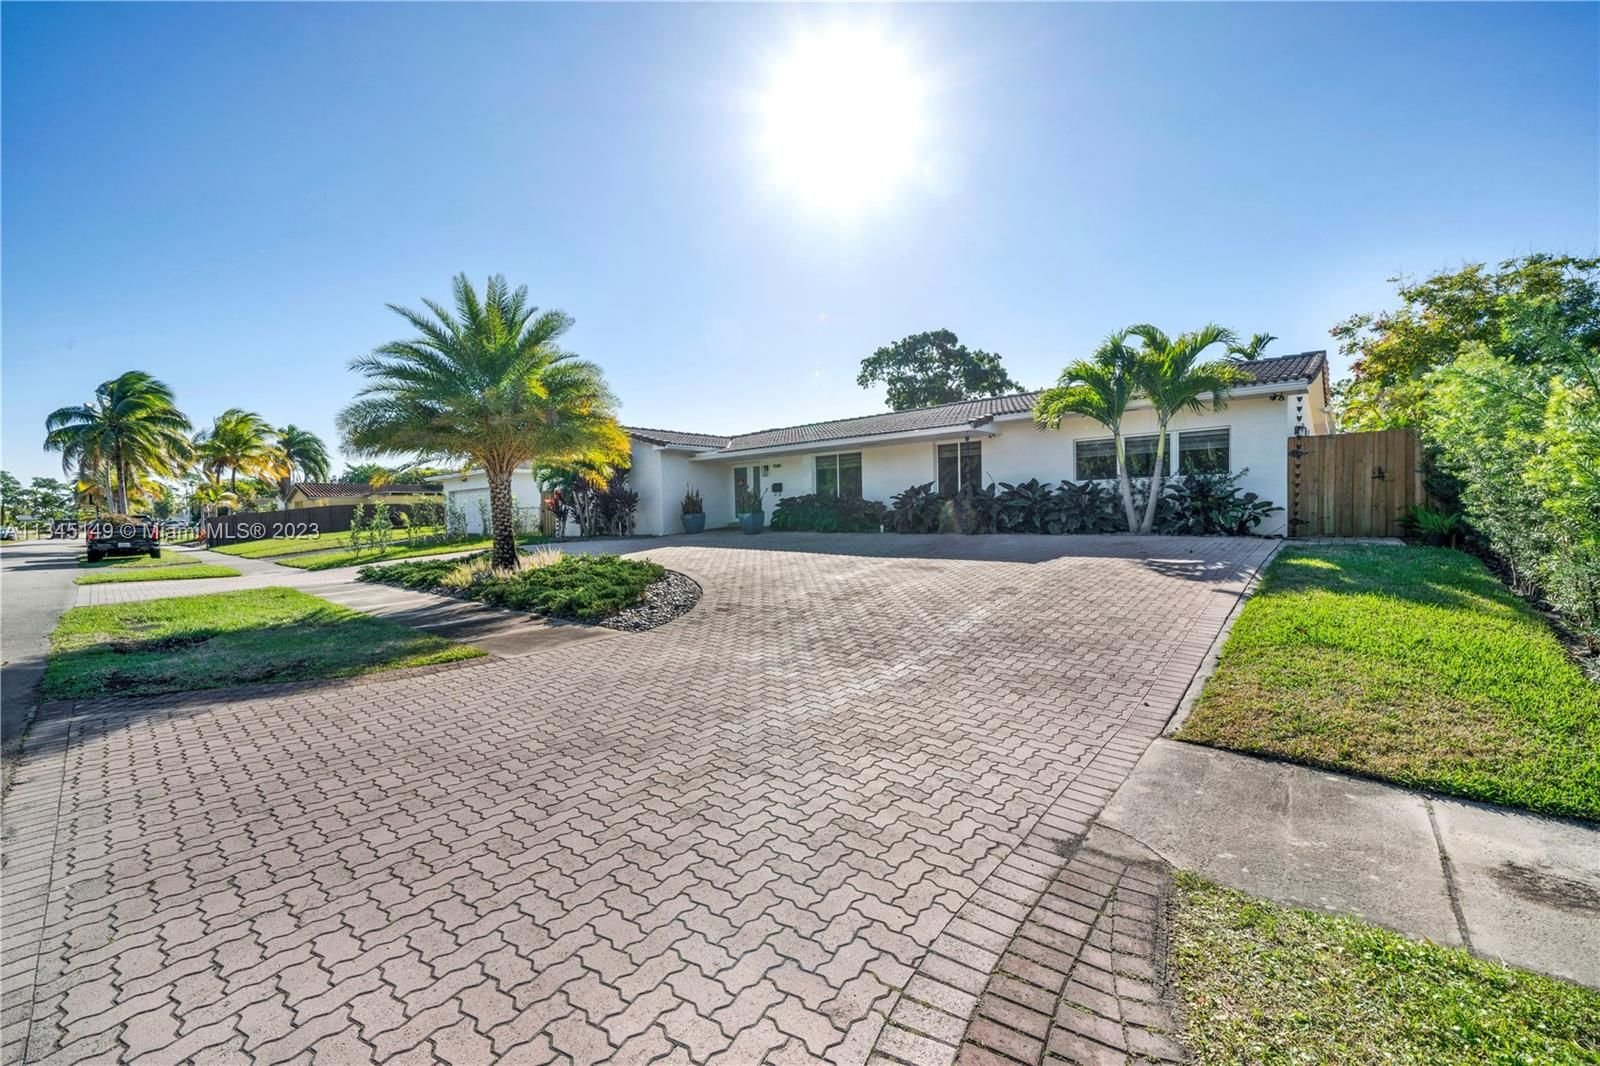 Real estate property located at 9386 77th St, Miami-Dade County, Miami, FL